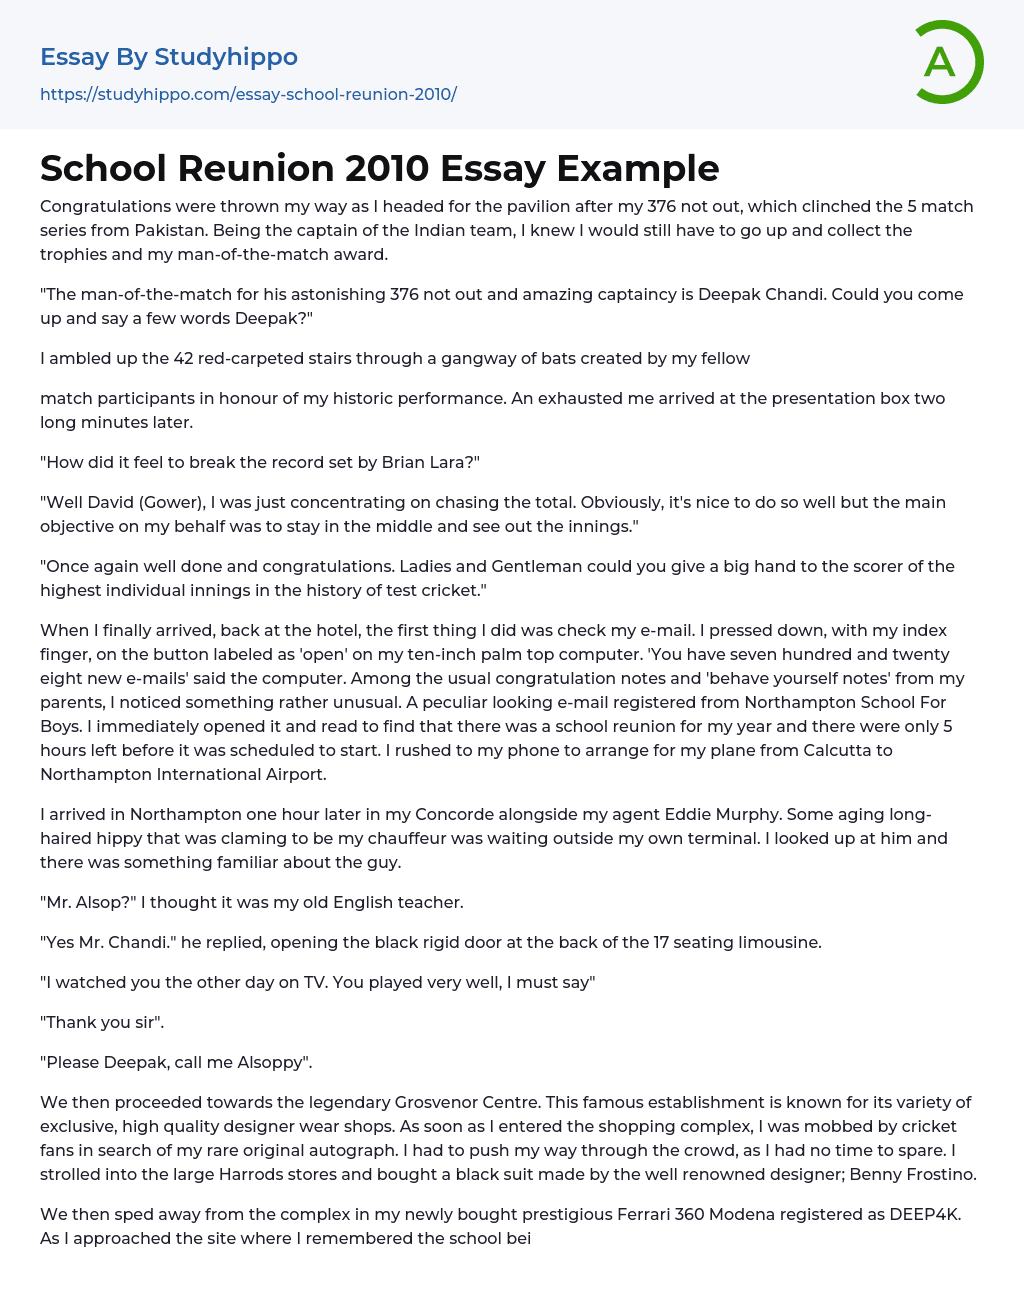 School Reunion 2010 Essay Example